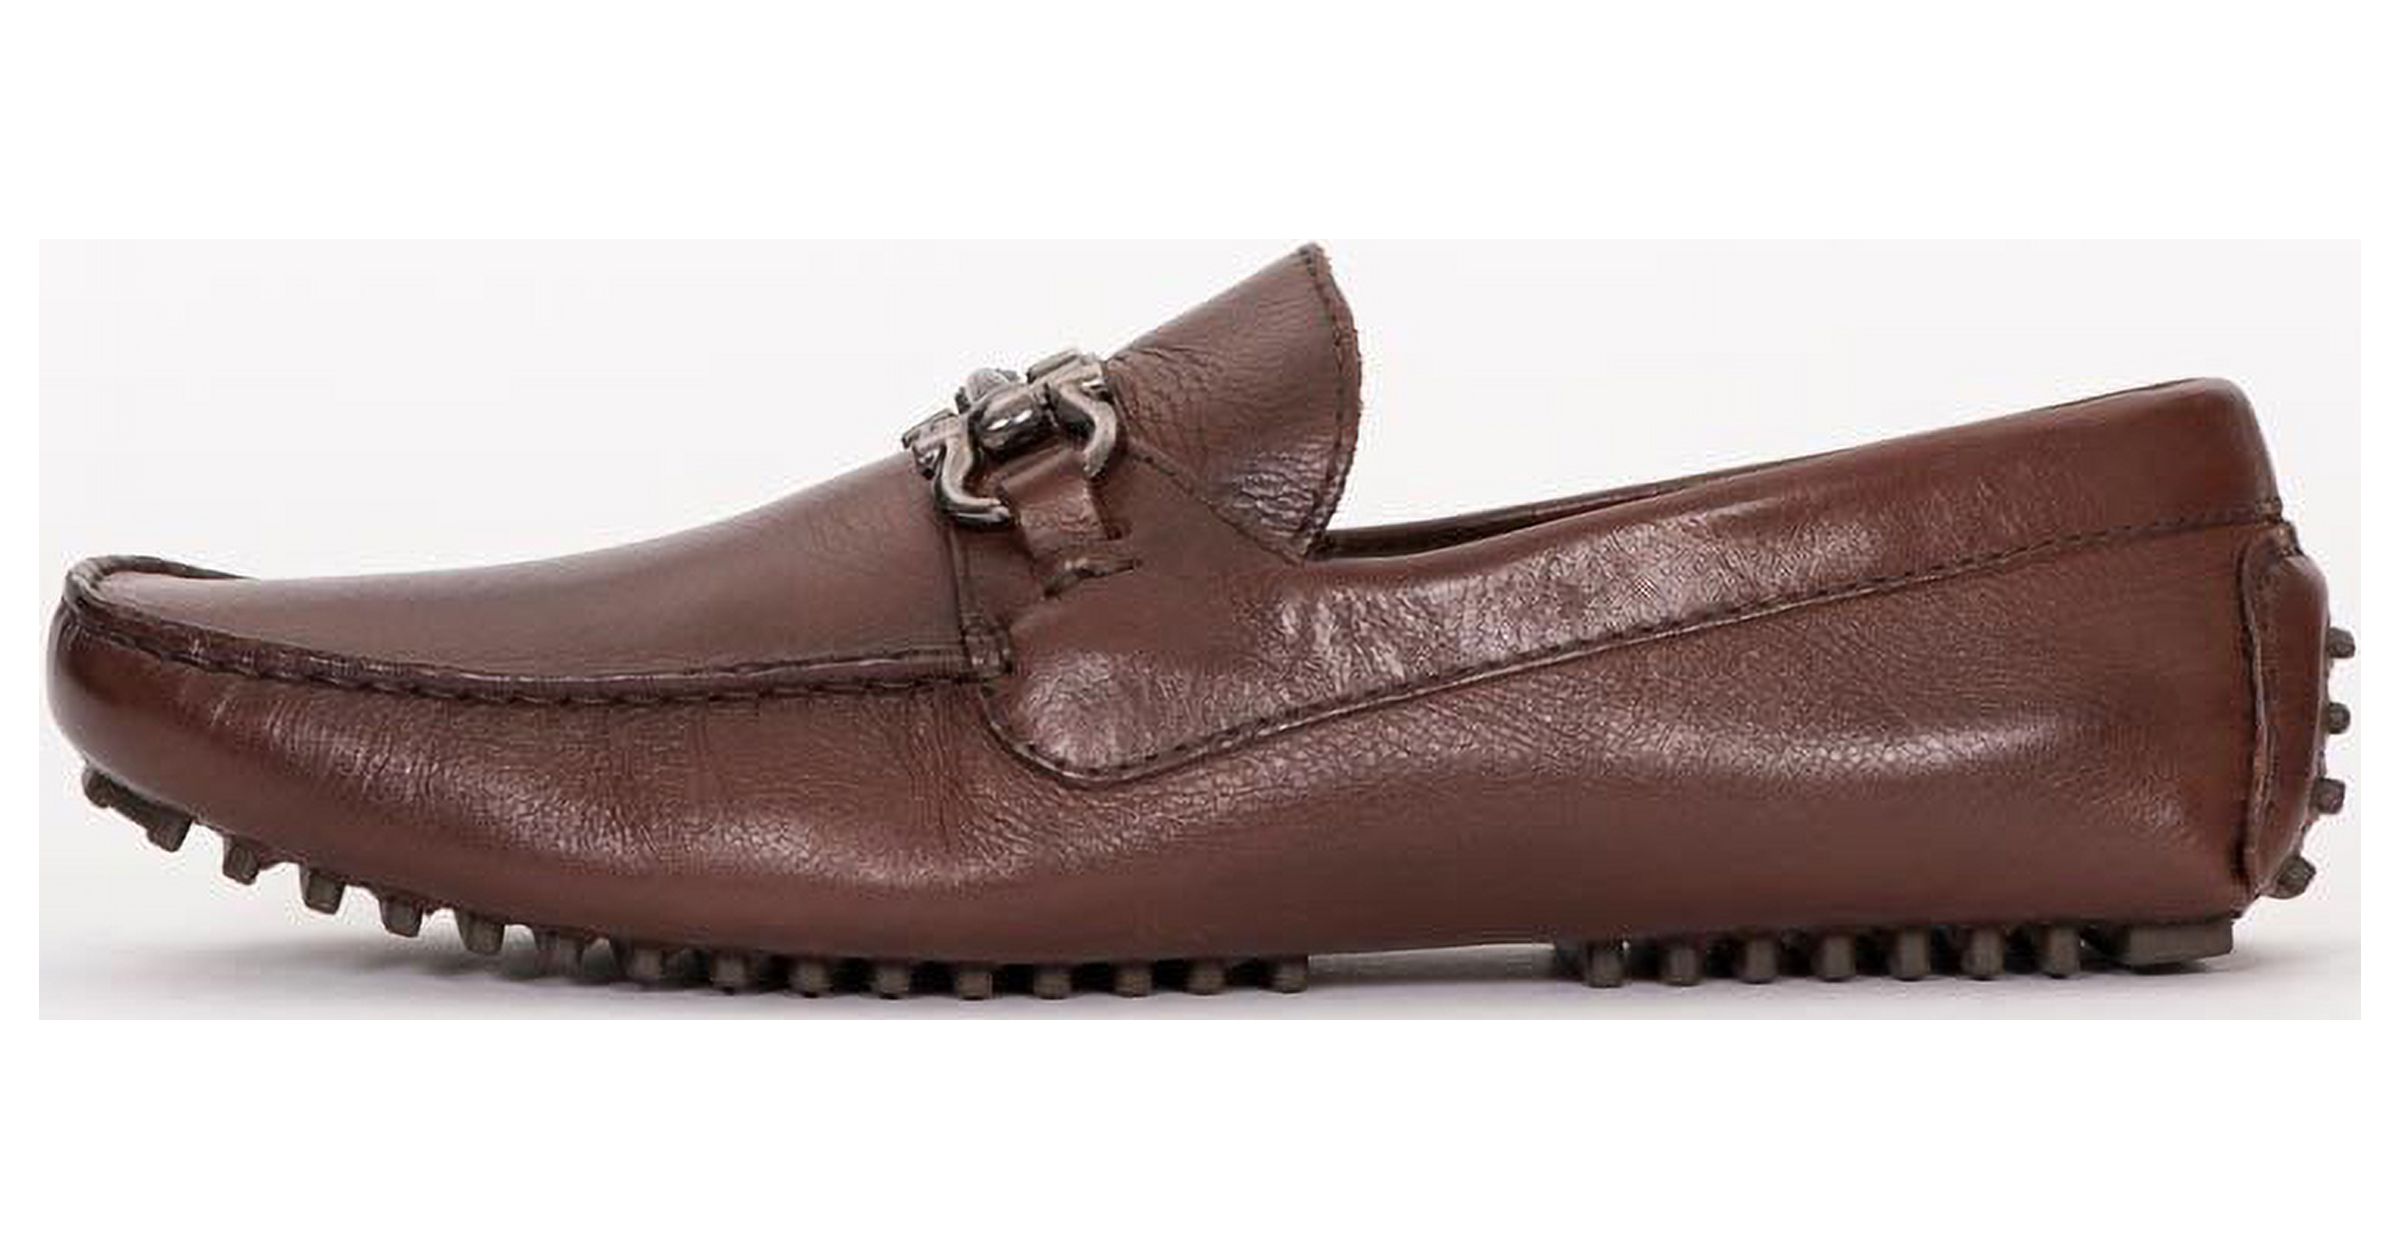 Pair Of Kings Mens Top Kicker Brown Leather Classic Slip In Dress Moccasin Shoe (Cognac, 9.5) - image 1 of 1